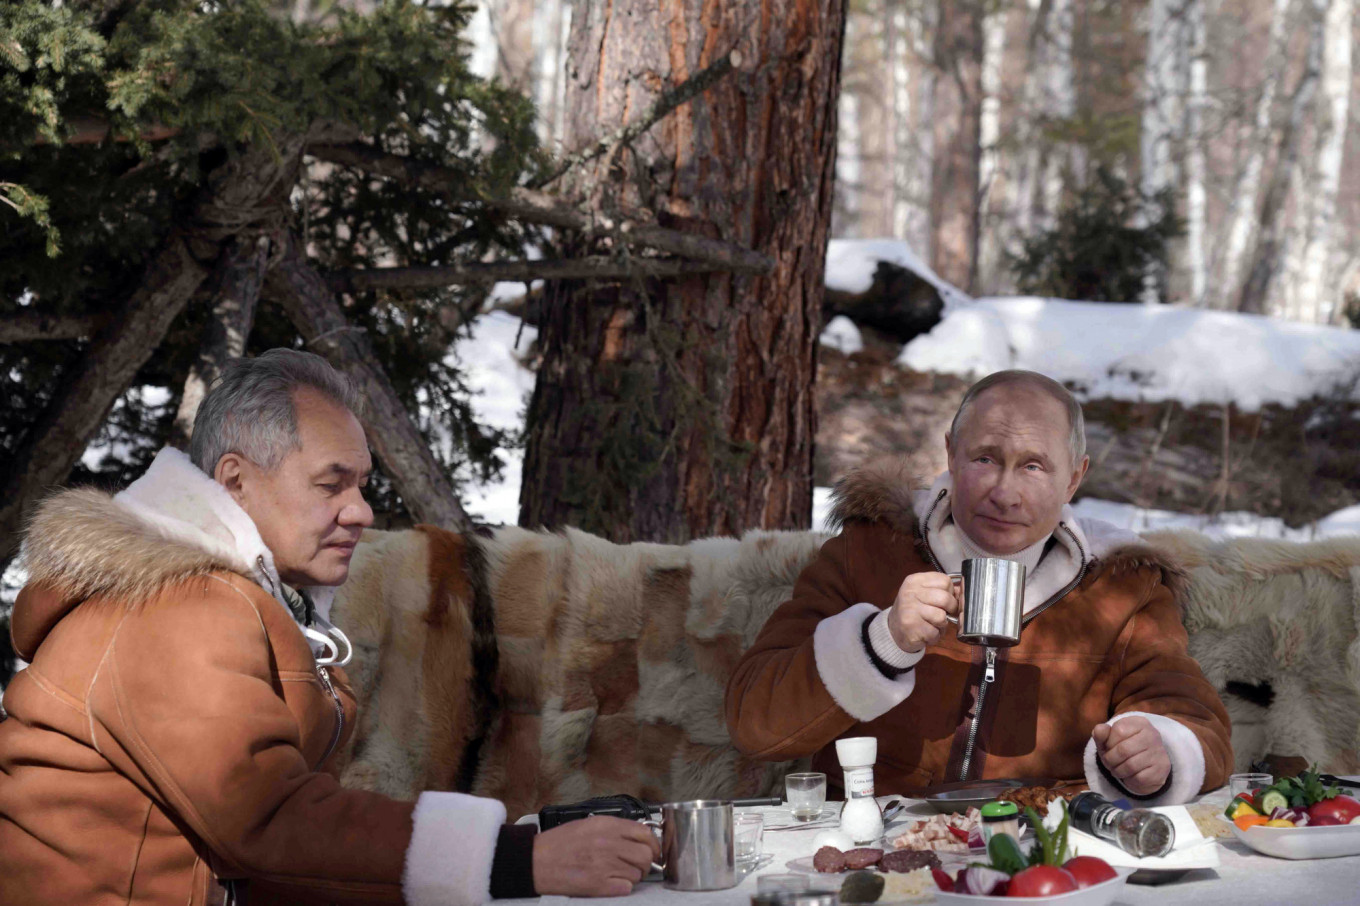 Putin Pilots Bumpy All-Terrain Rig on Siberian Holiday